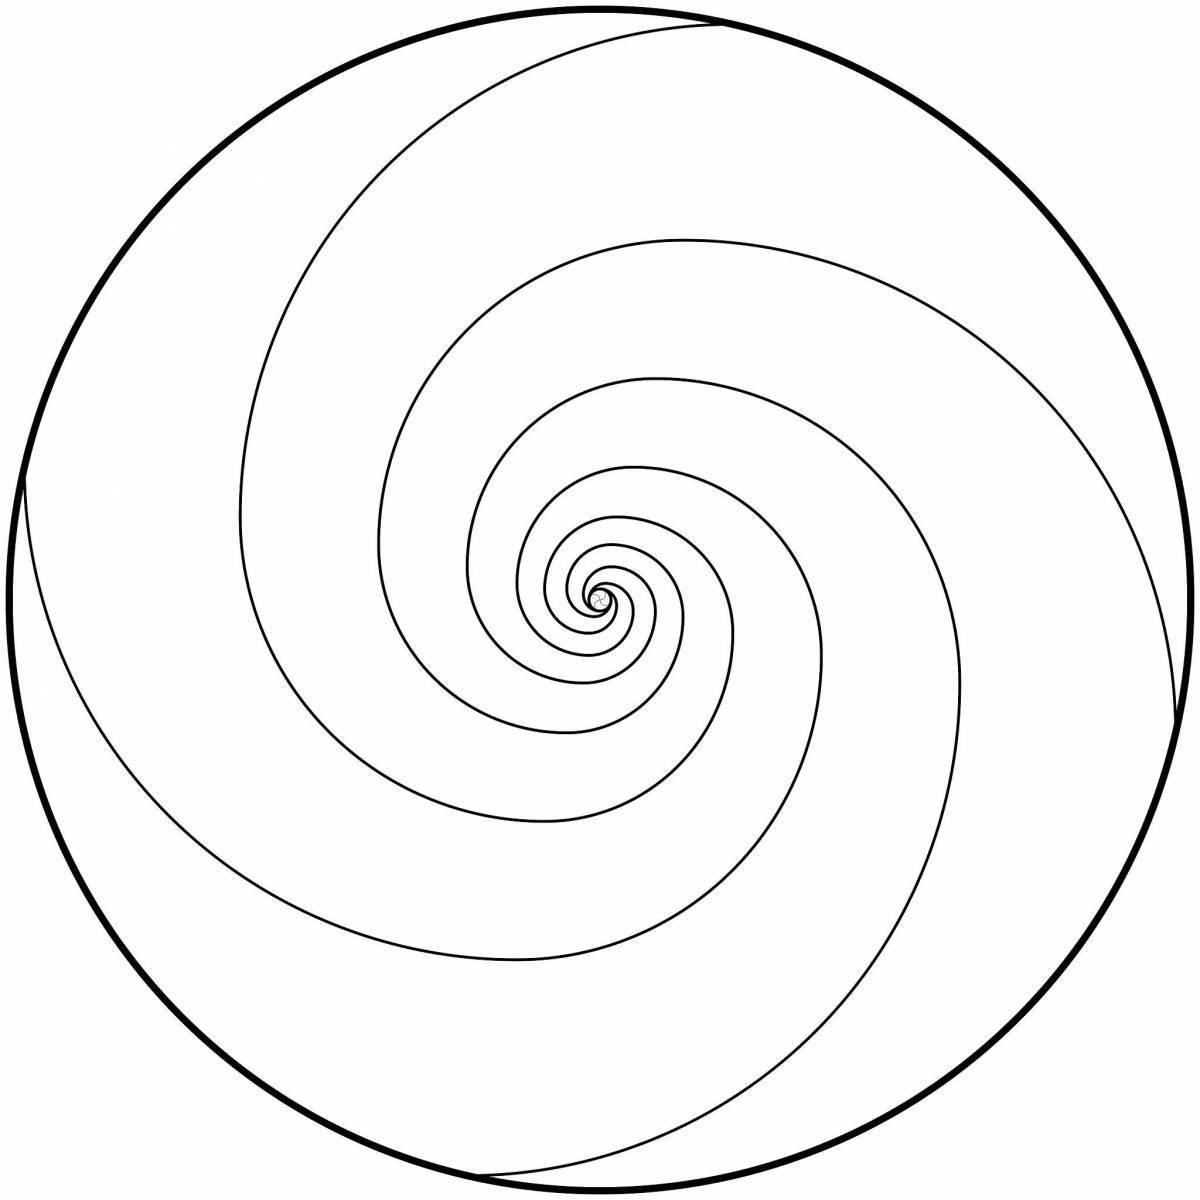 Beautiful spiral pattern coloring page